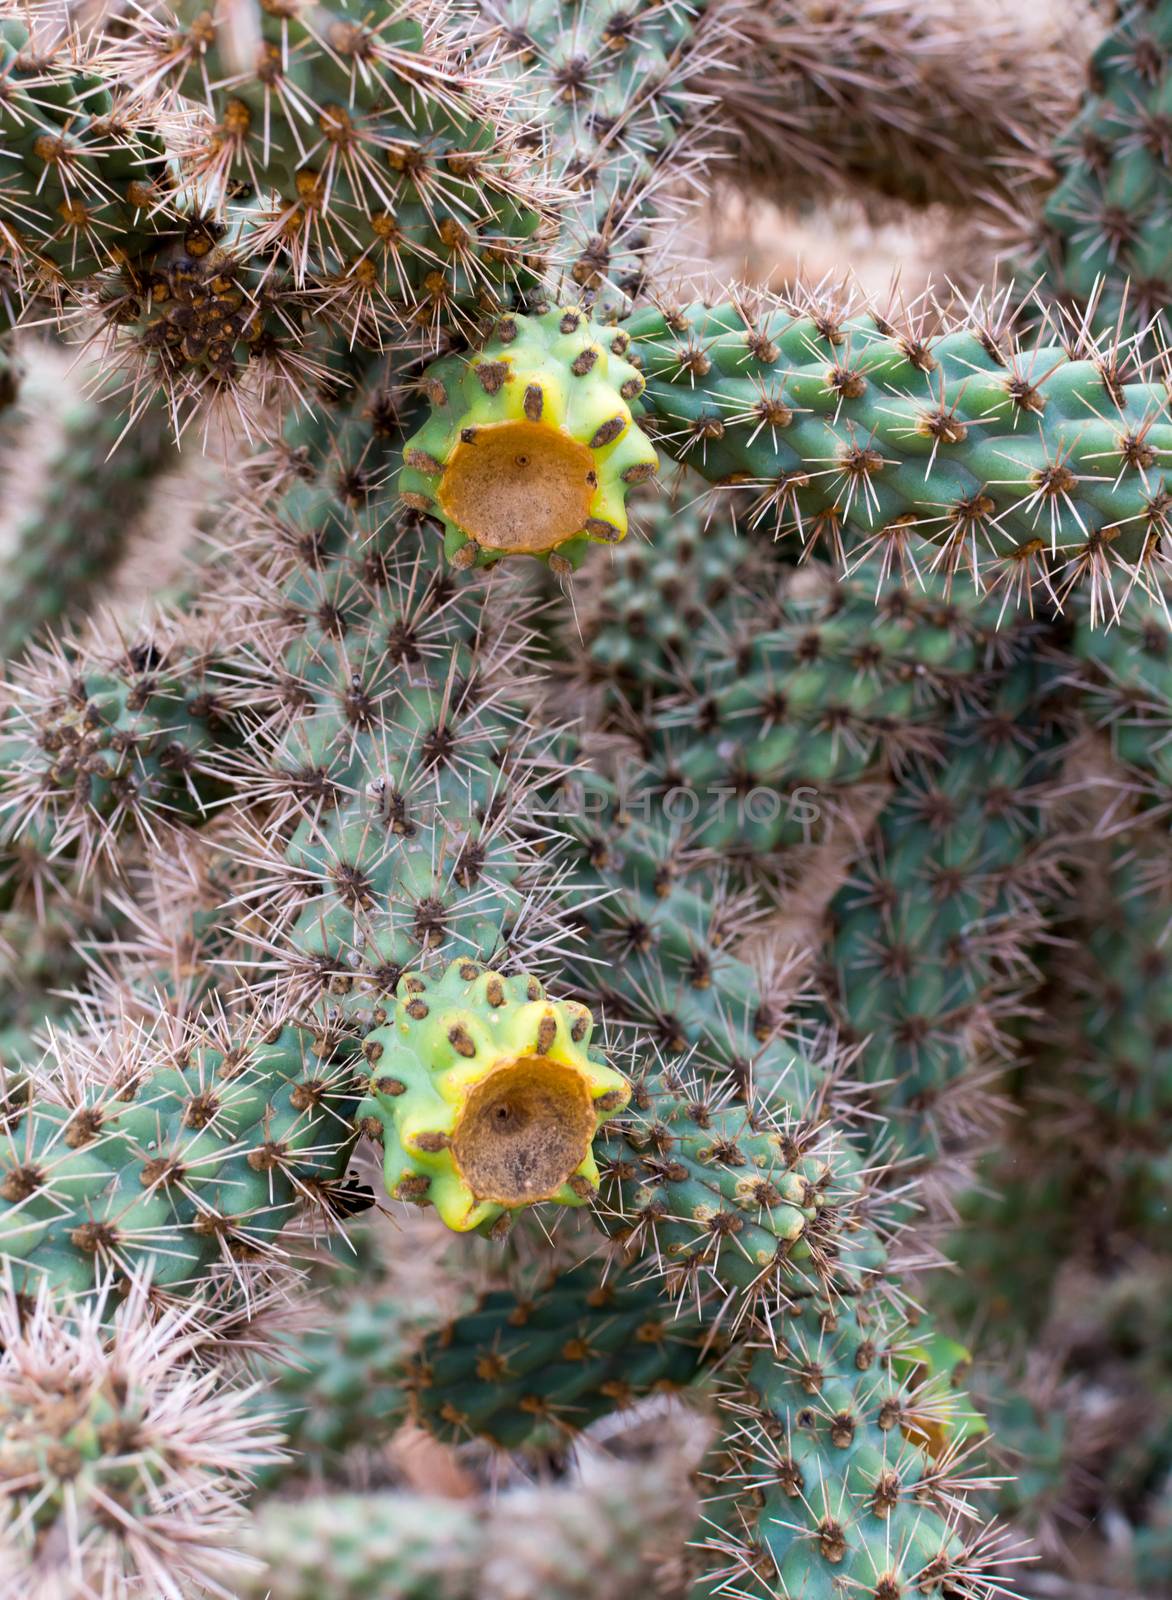 Yellow cactus fruits Opuntia.